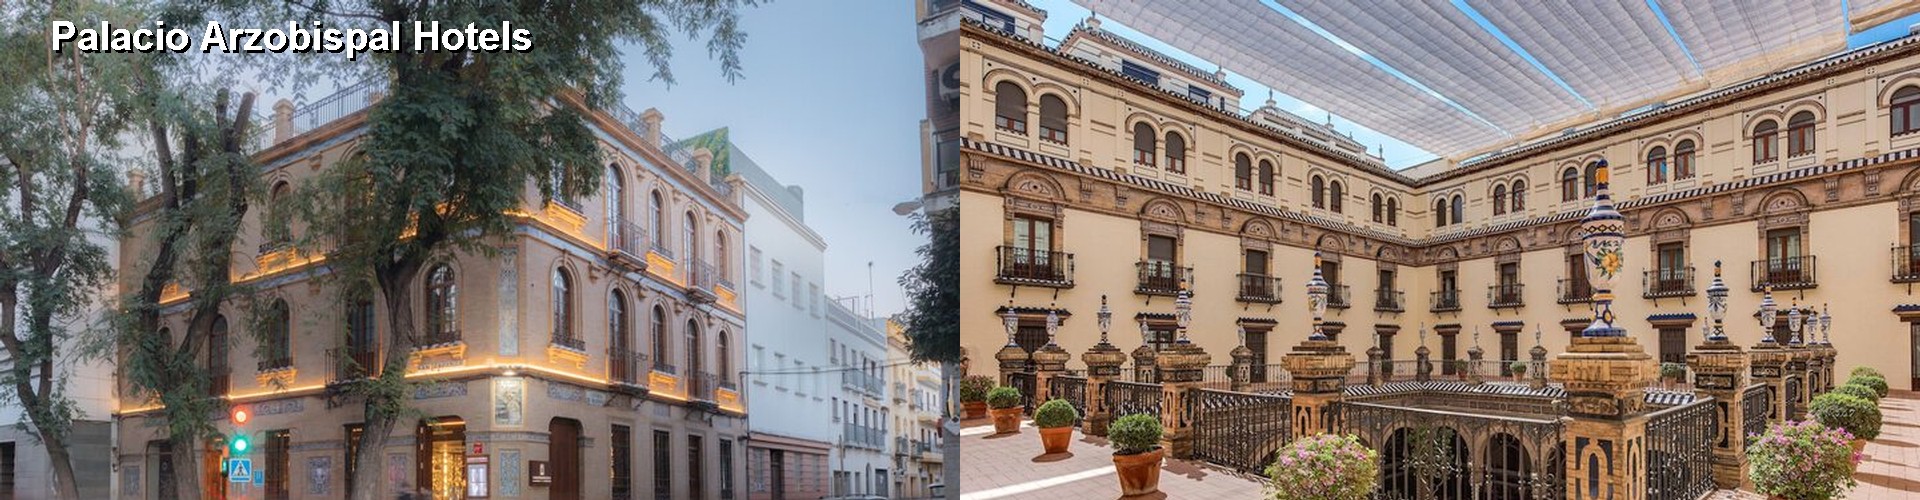 5 Best Hotels near Palacio Arzobispal